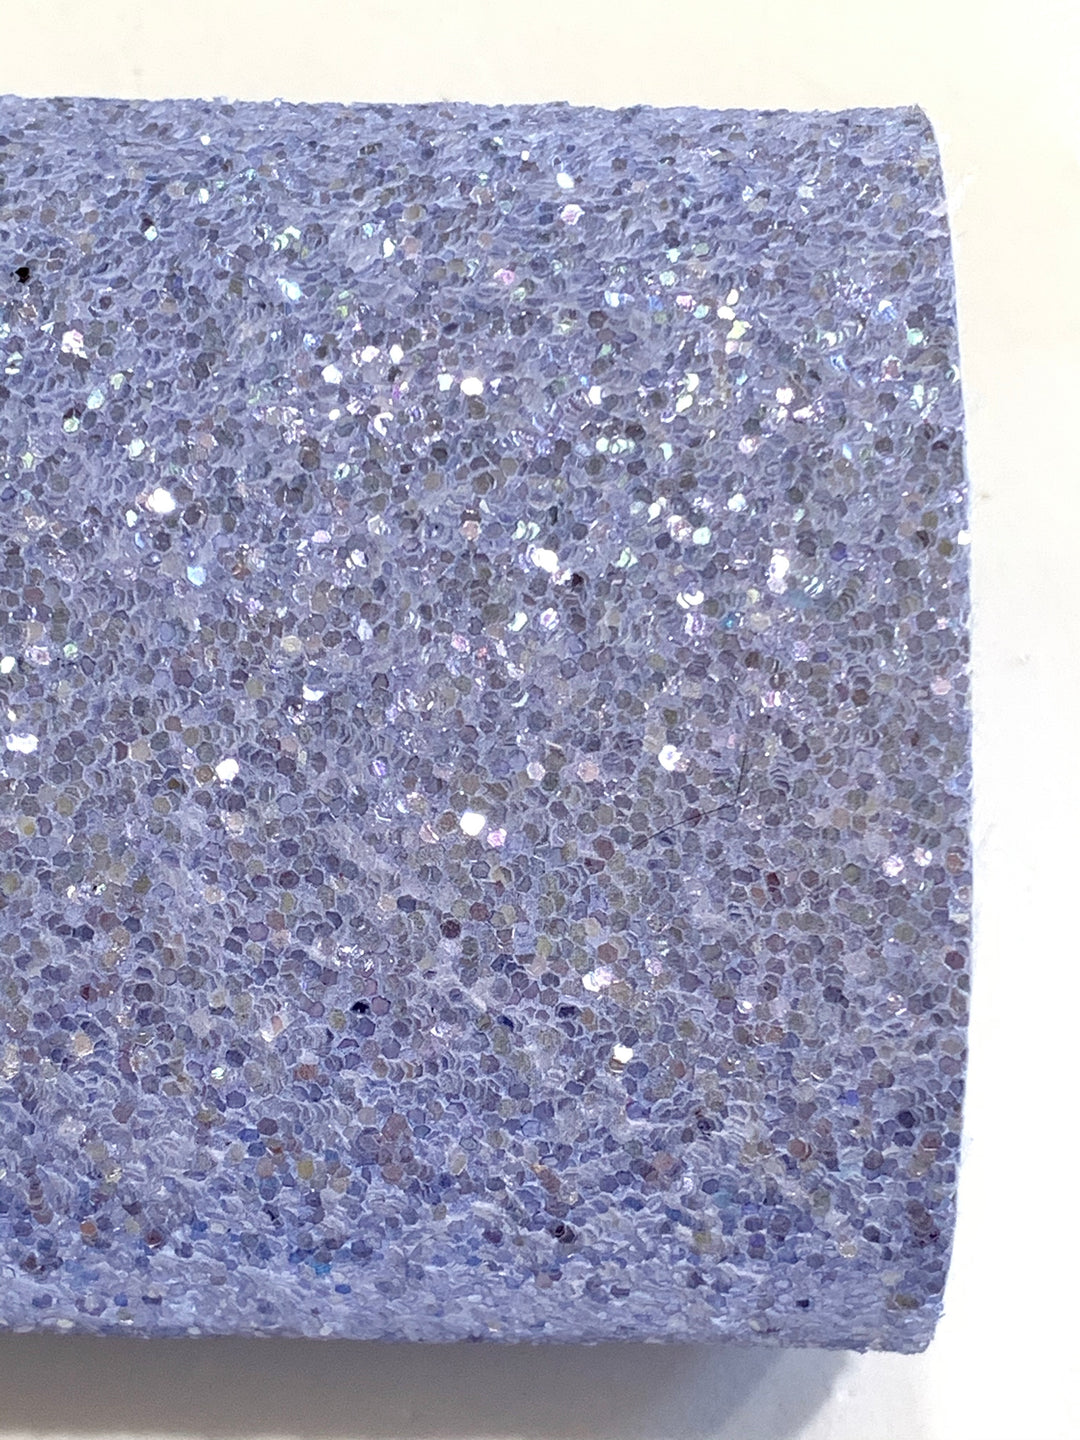 Cornflower Blue Sparkle Glitter Canvas Fabric Sheet